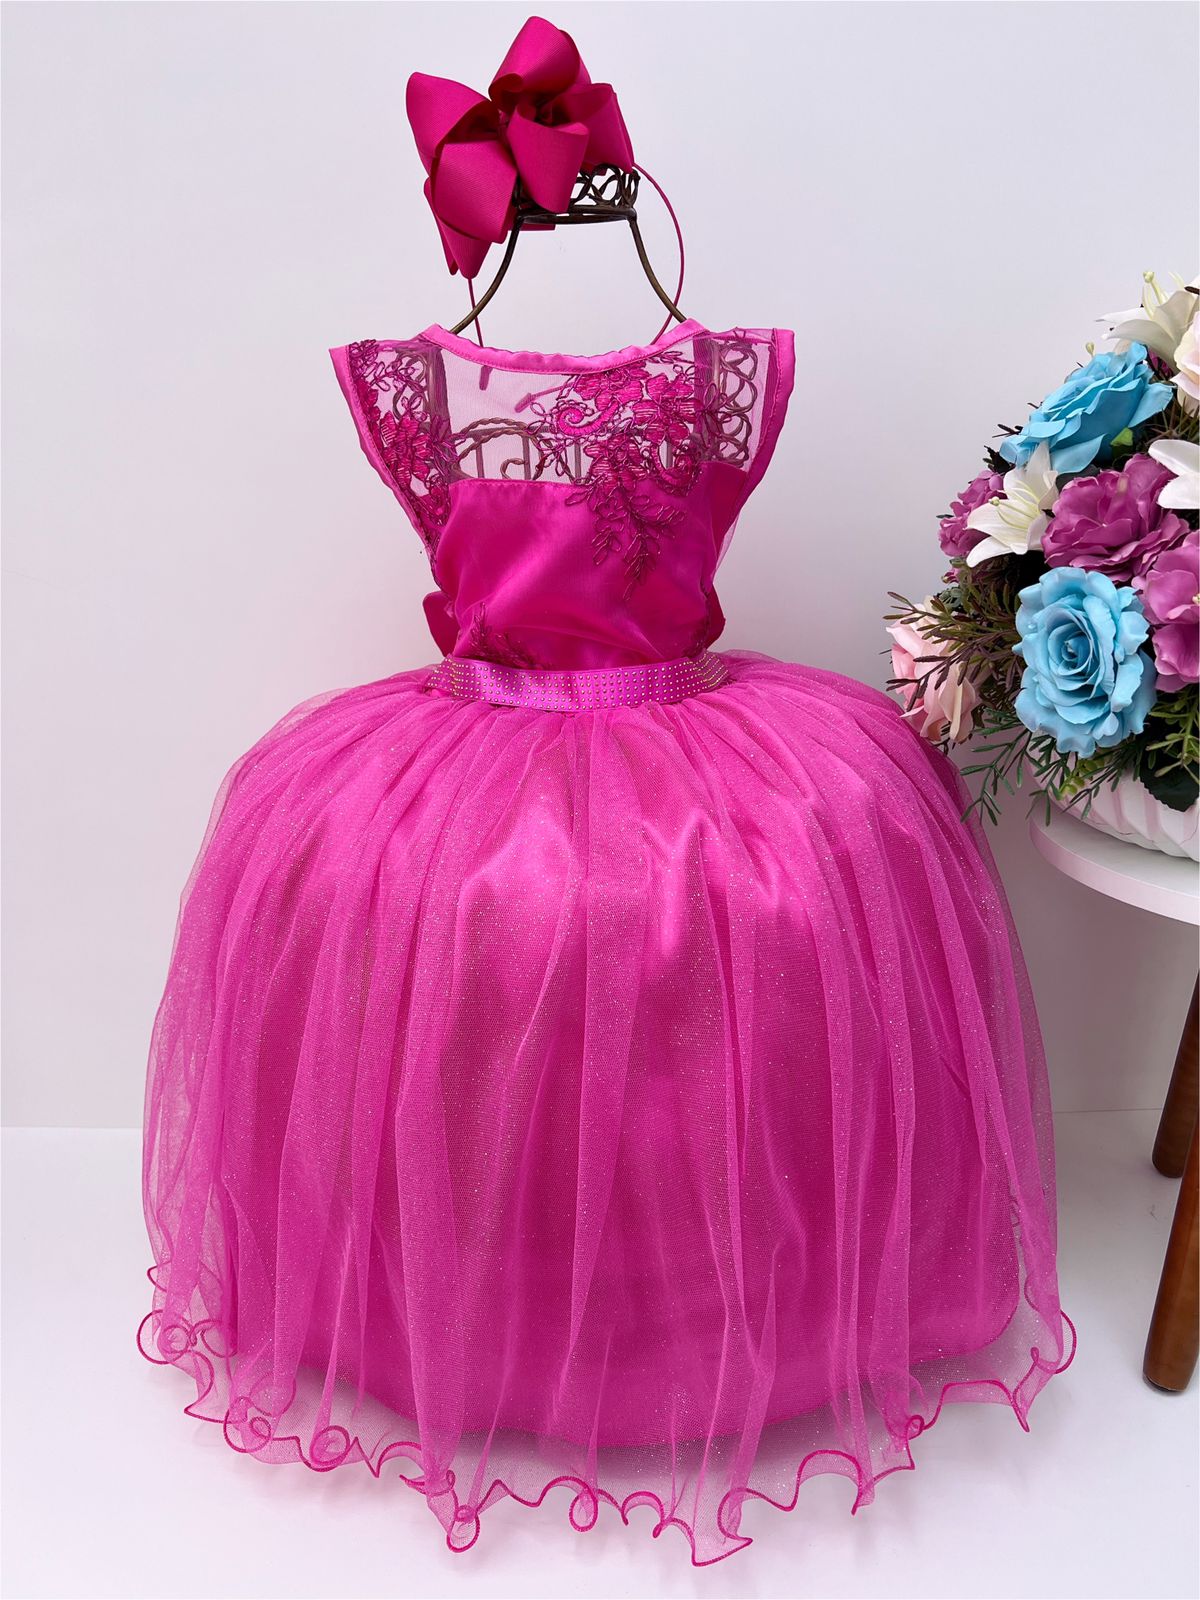 Vestido Infantil Pink Renda Saia Brilho Cinto Strass